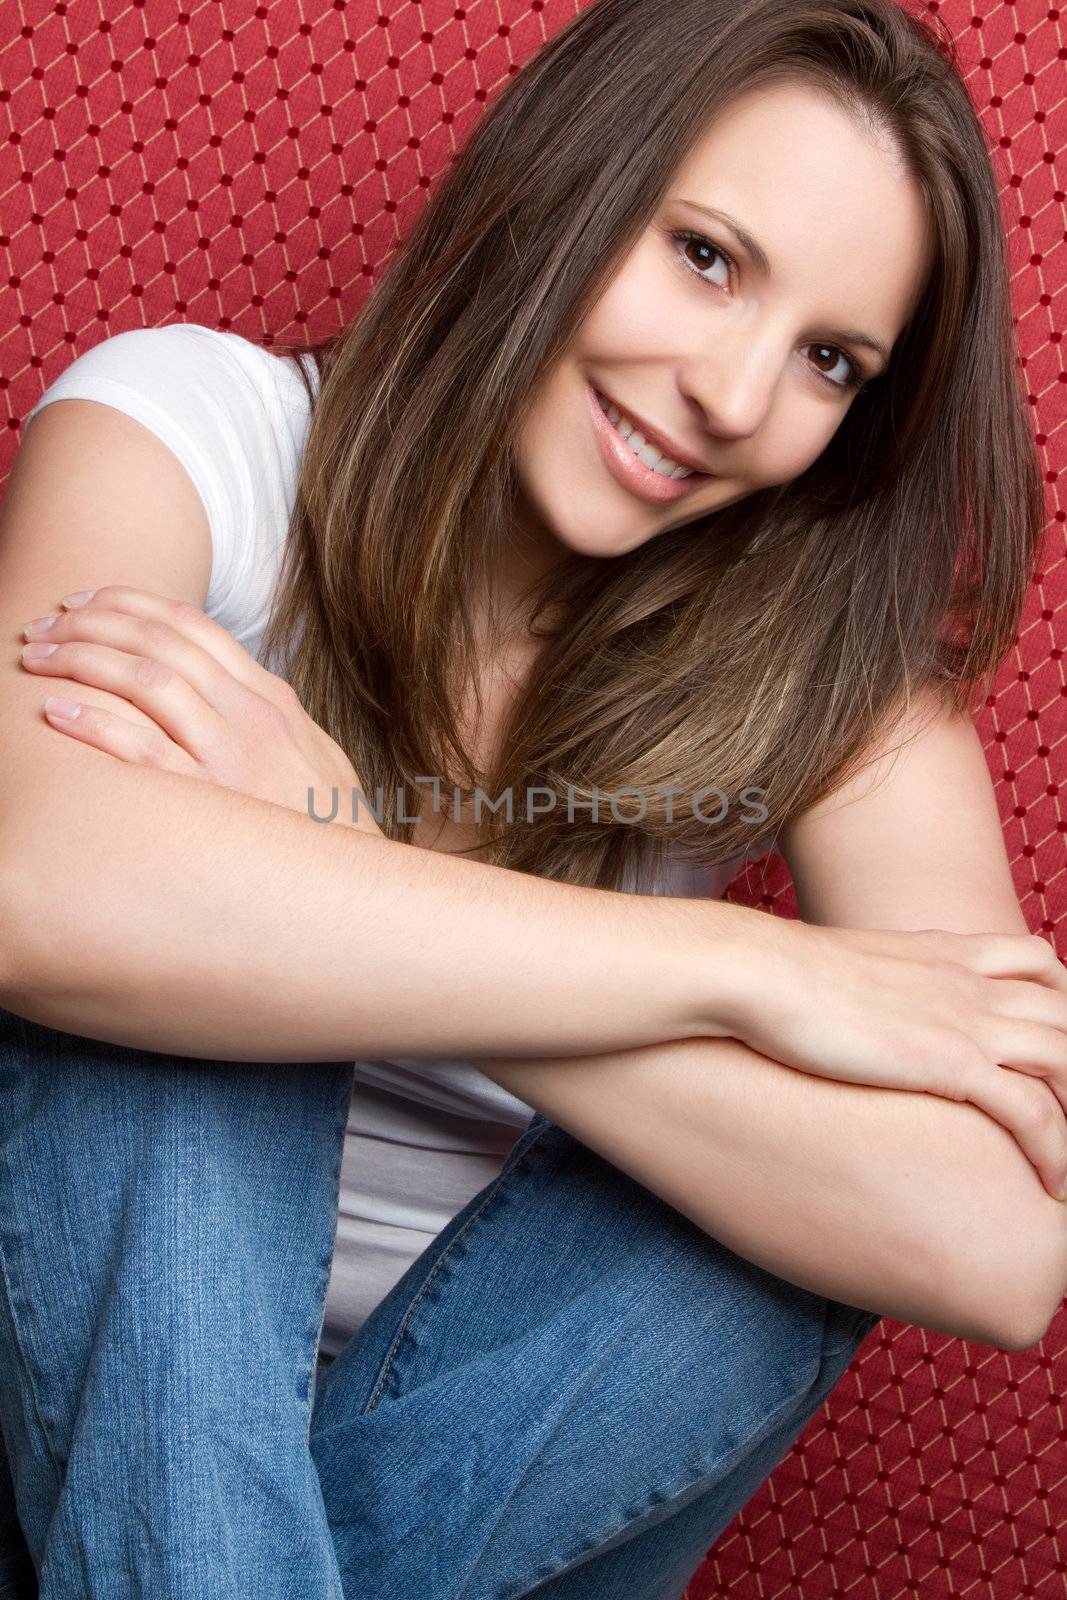 Beautiful smiling teenage girl